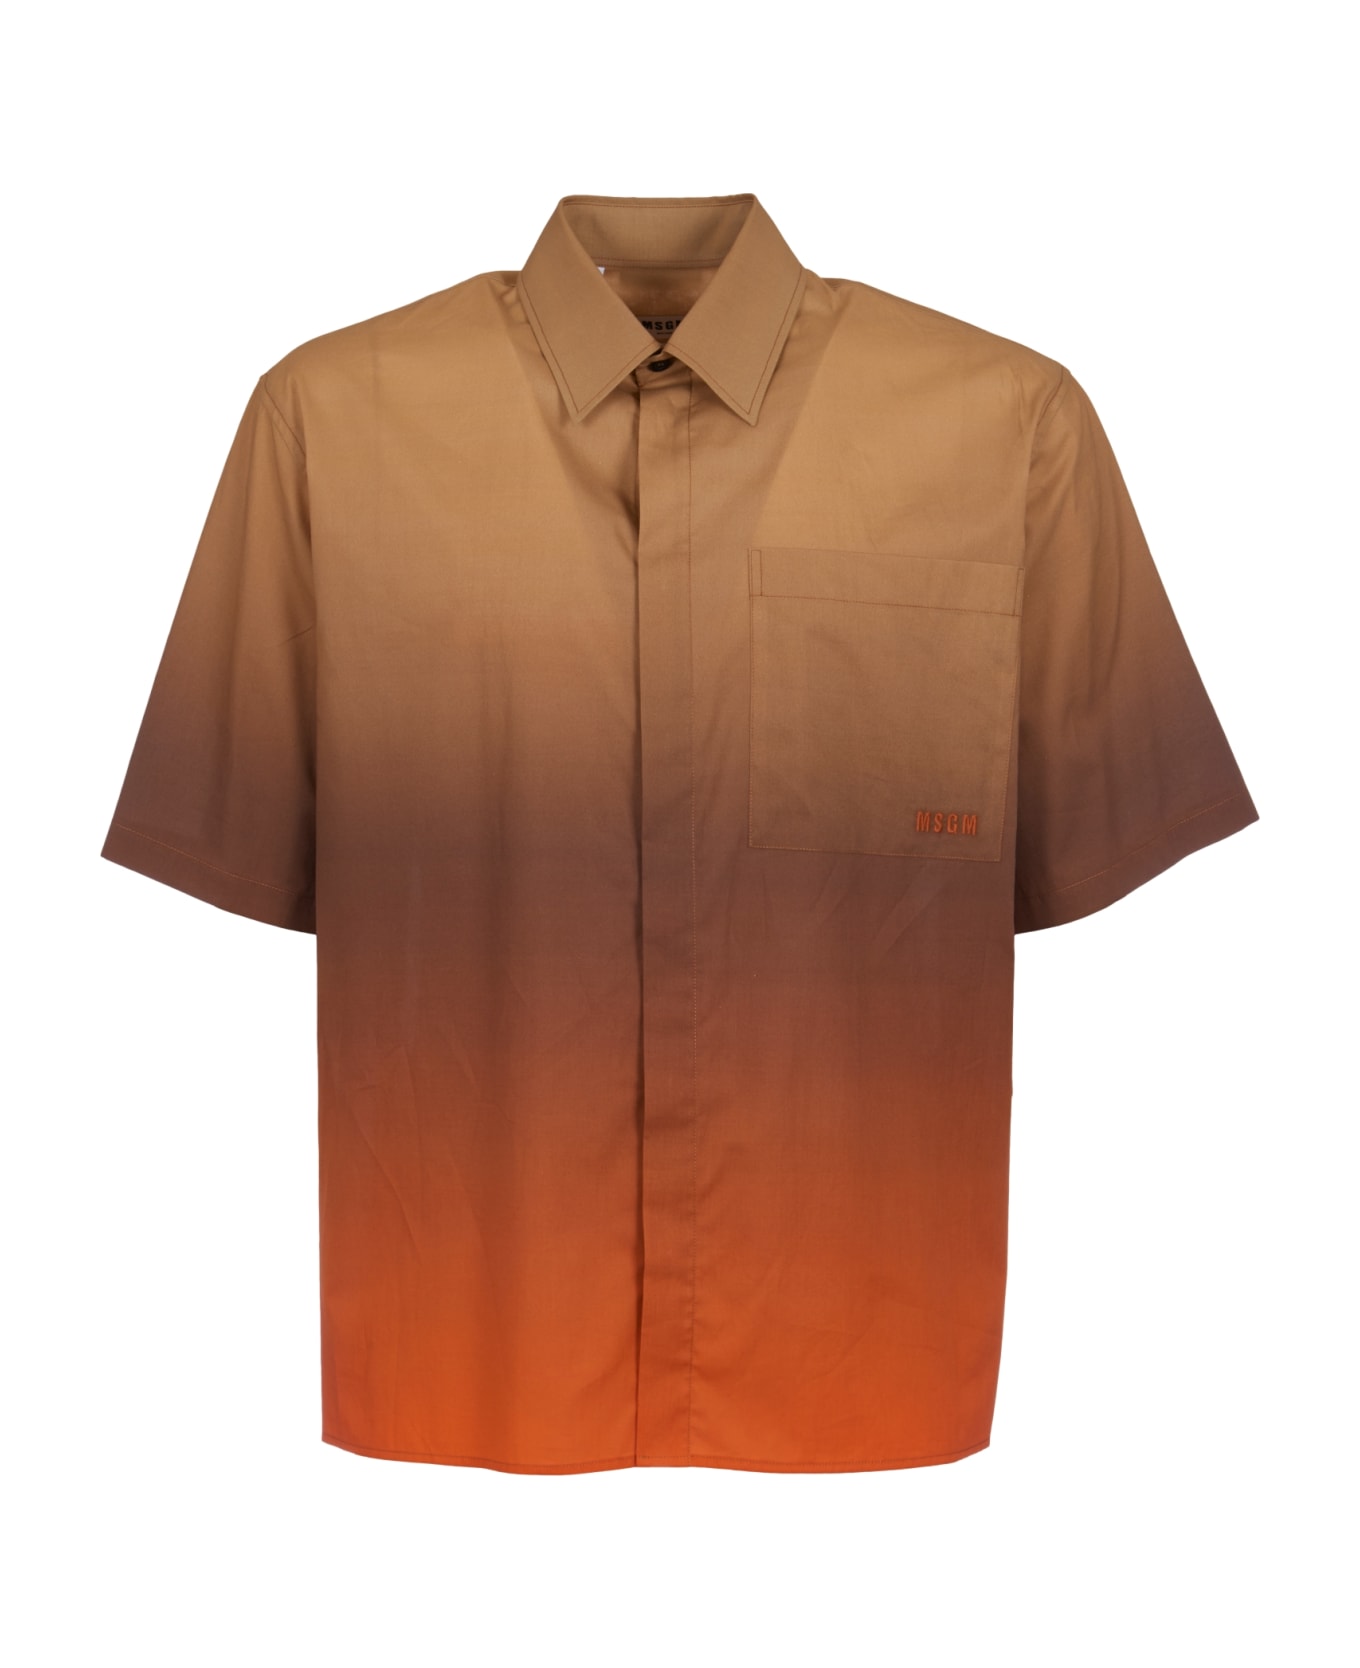 MSGM Dregrada Shirt - Beige/Orange